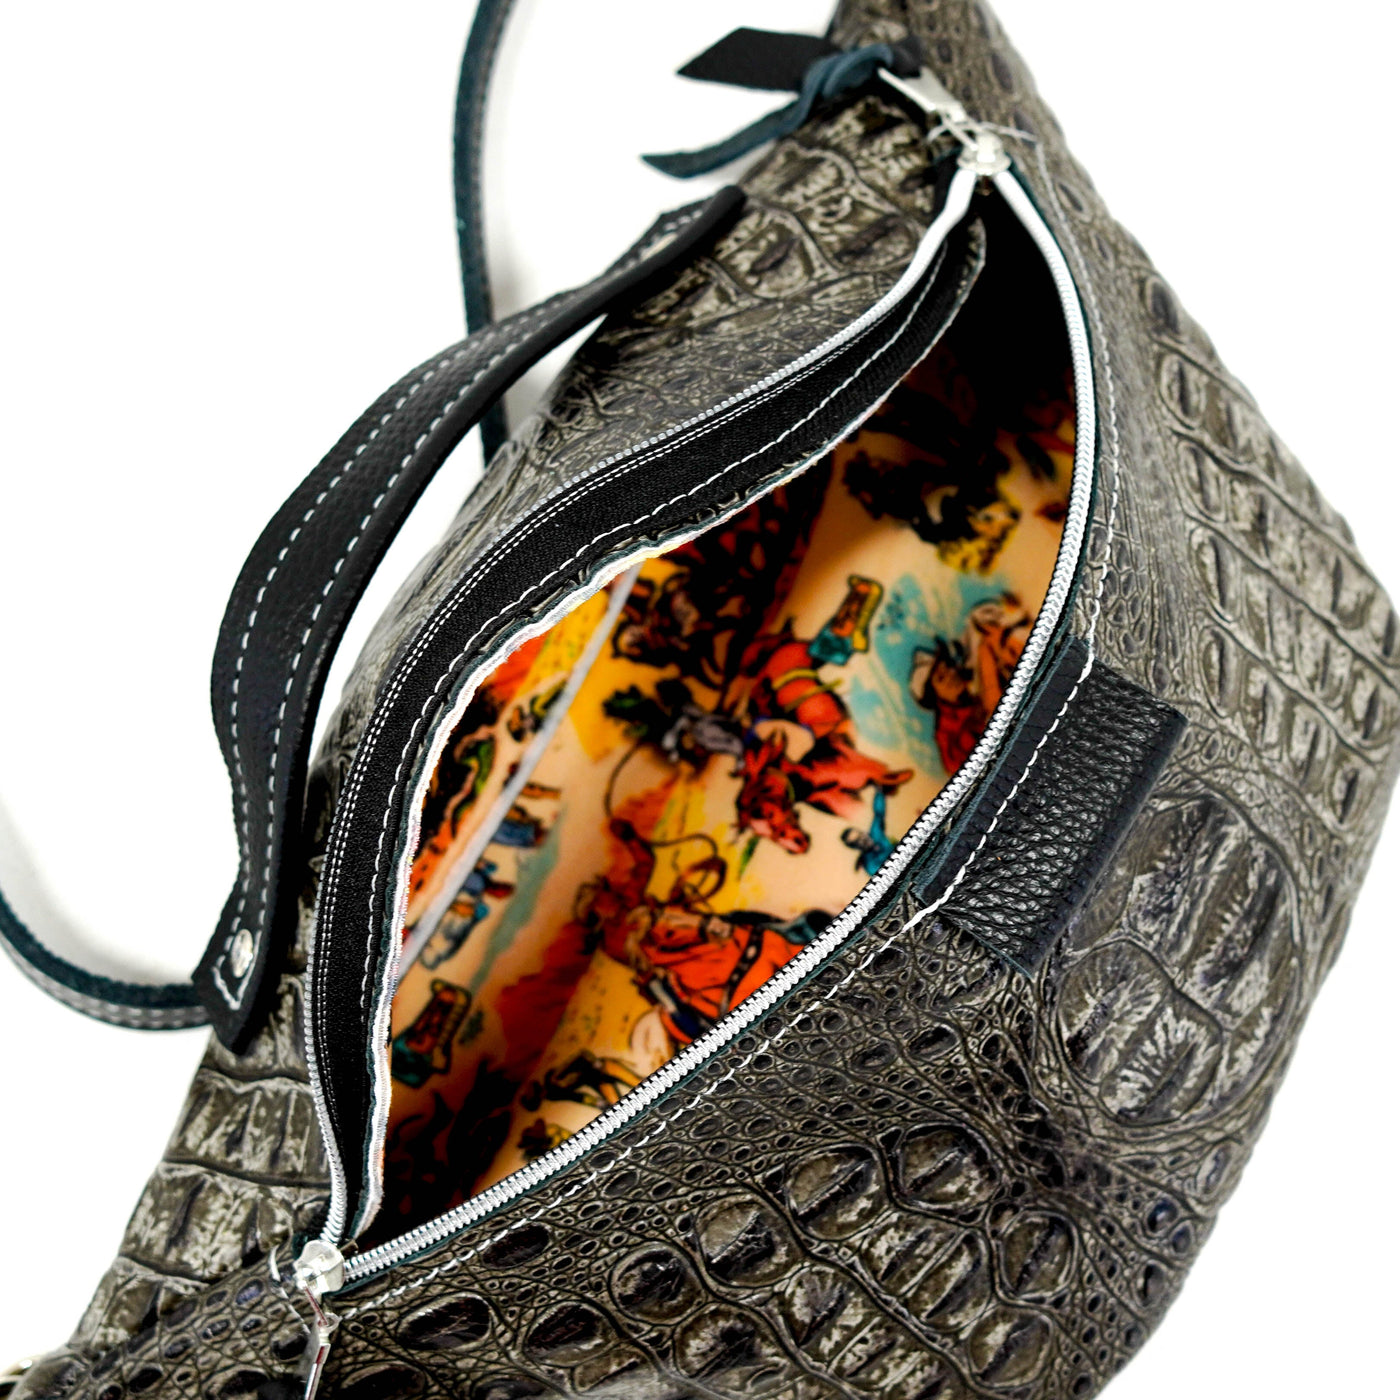 Bum Bag - All Embossed w/ Smoke Show Croc-Bum Bag-Western-Cowhide-Bags-Handmade-Products-Gifts-Dancing Cactus Designs